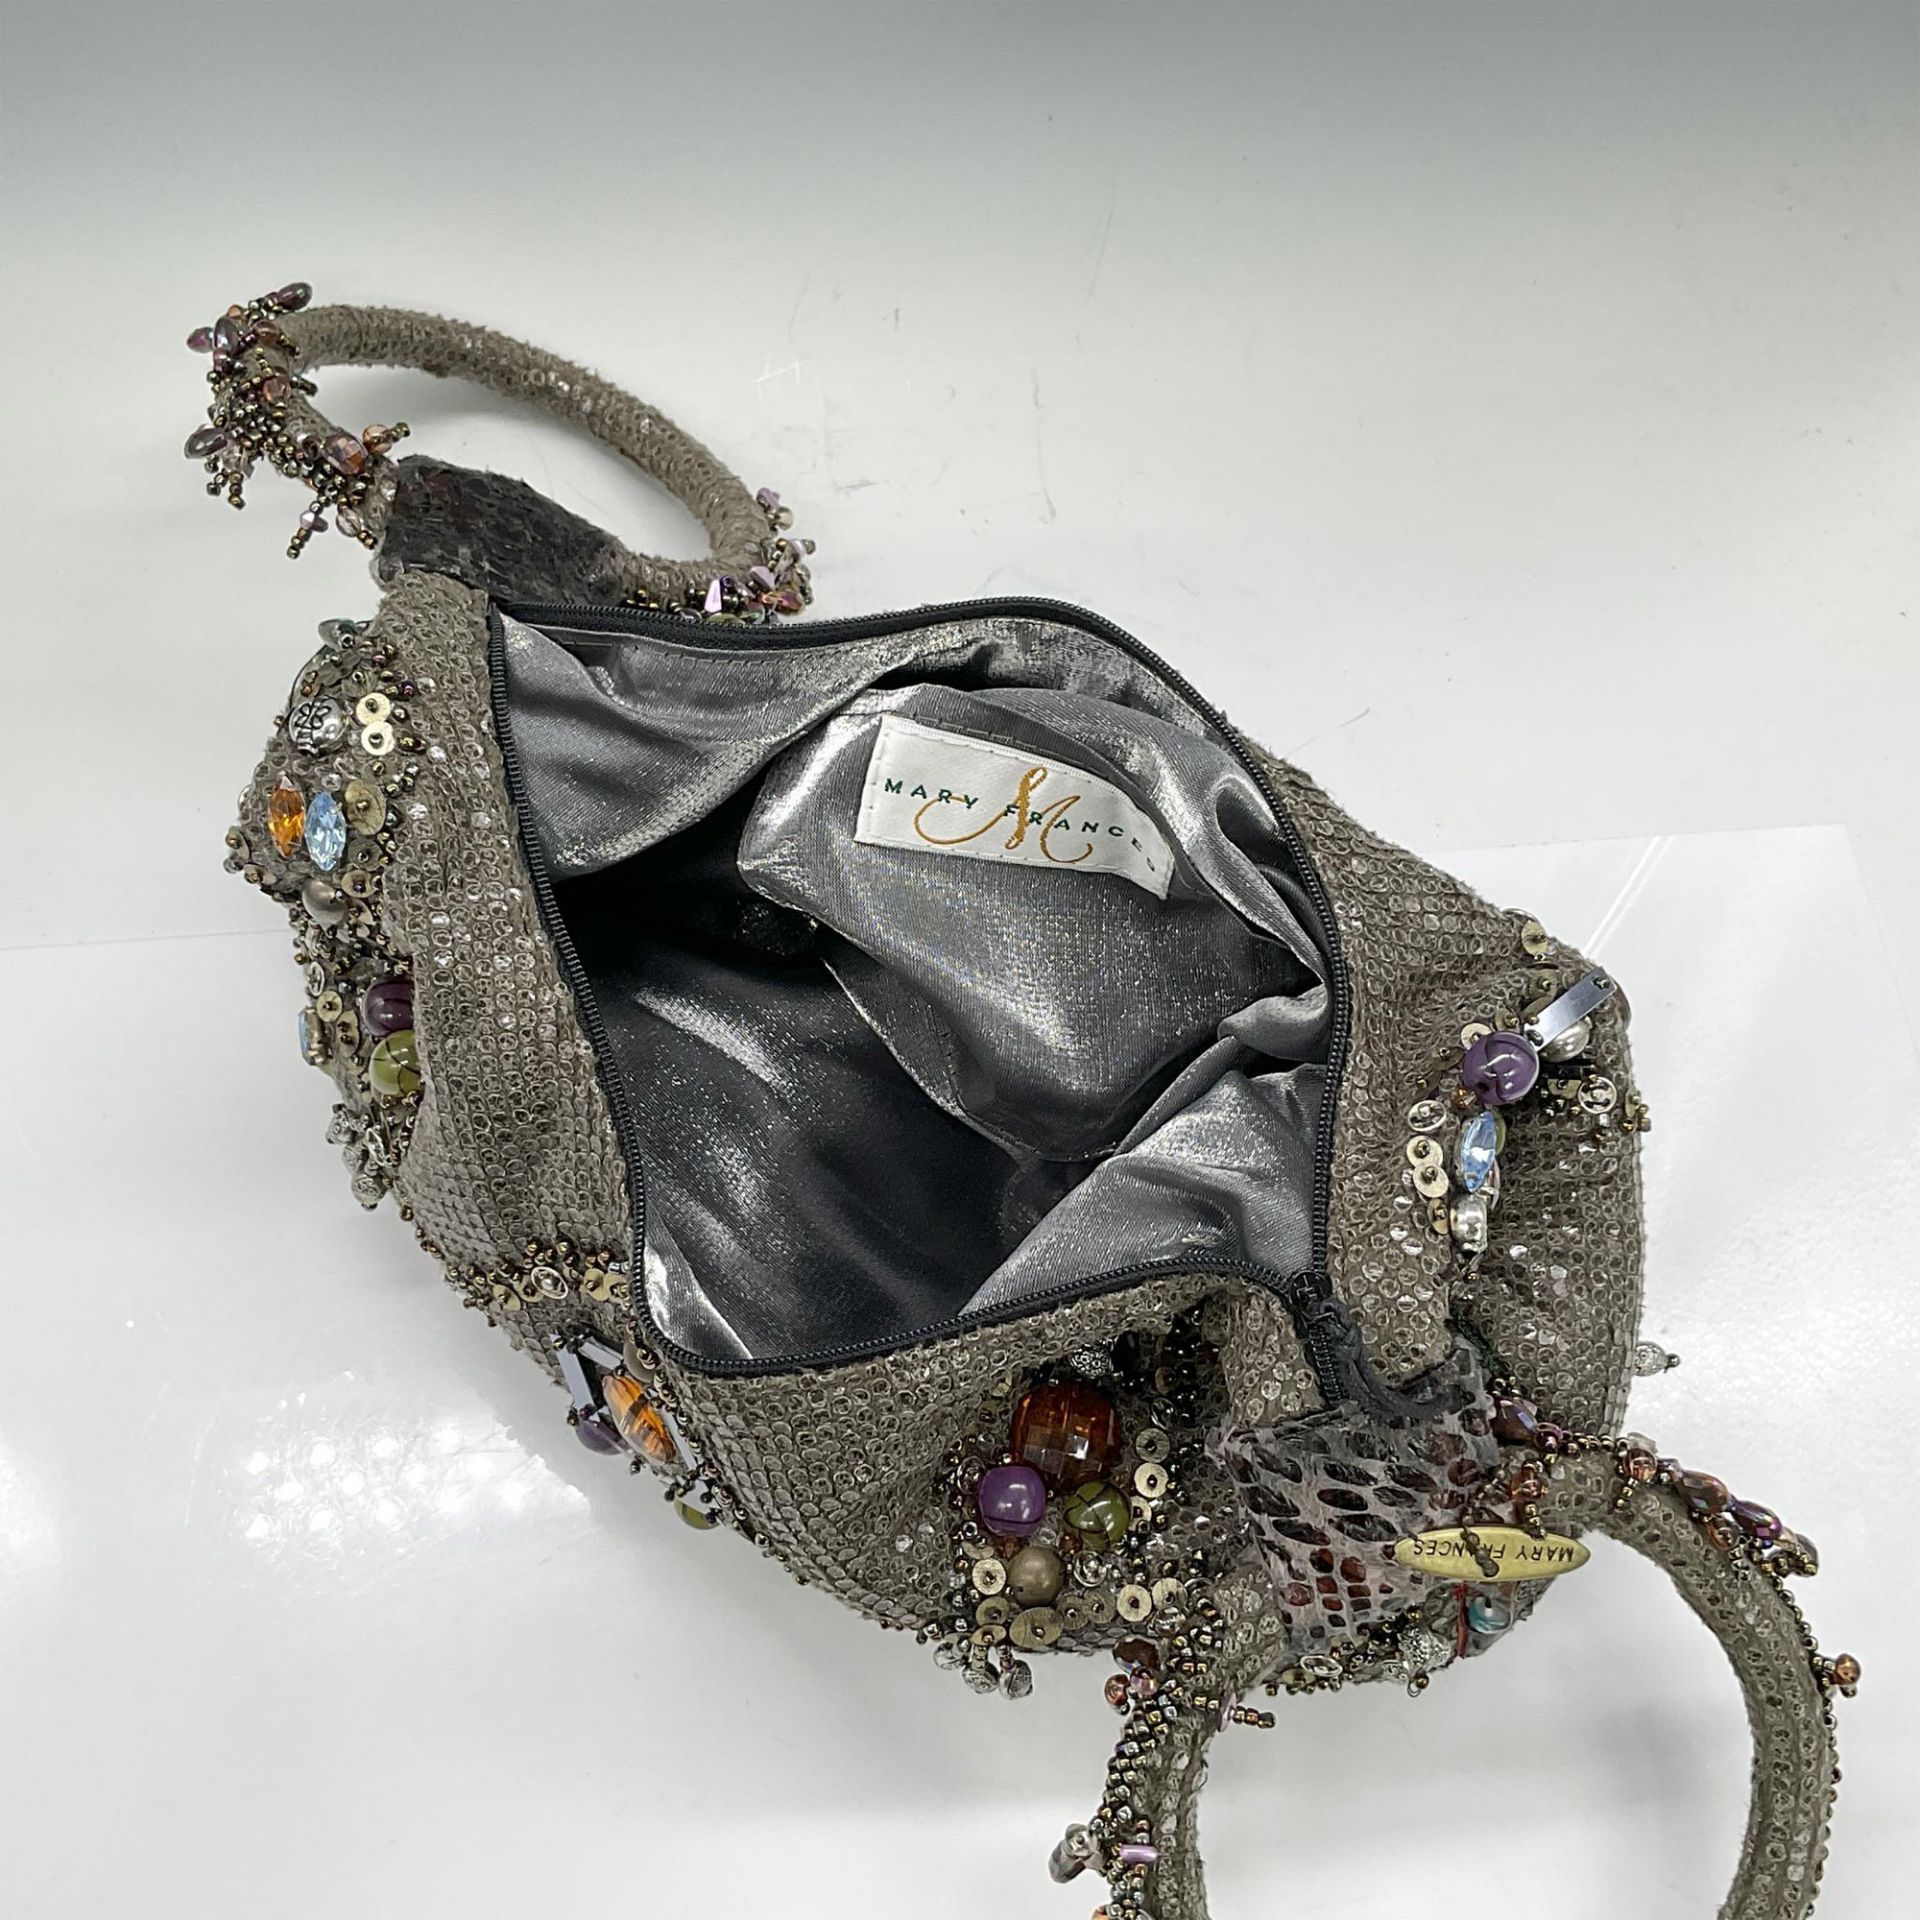 Mary Frances Fabric Handbag, Charcoal Grey w Beads - Image 5 of 5